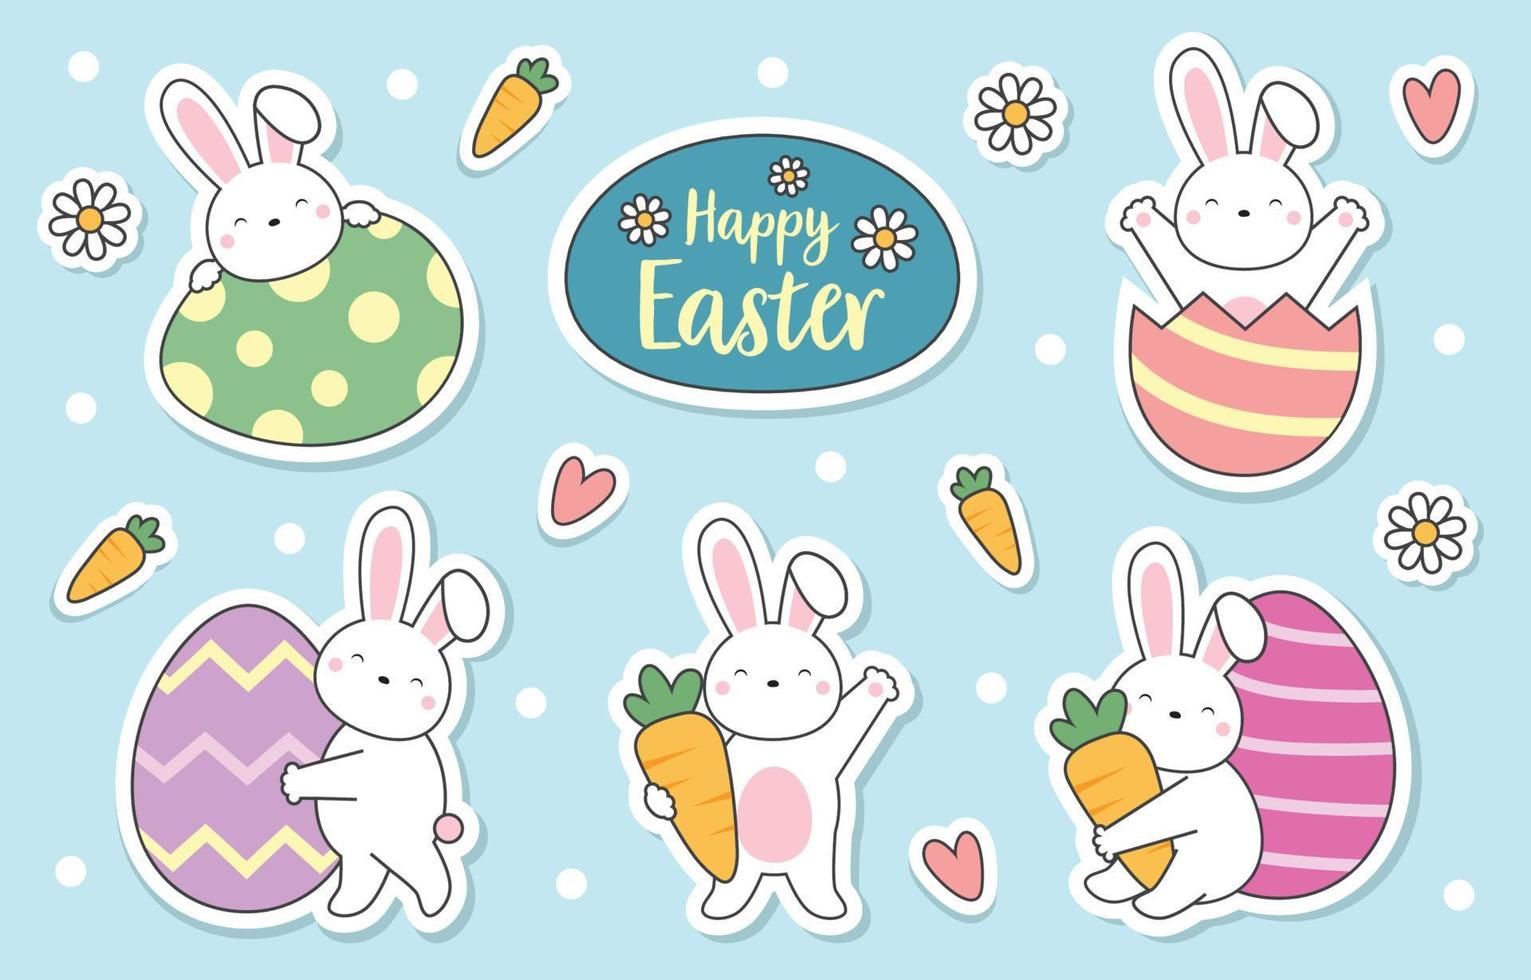 Rabbit Character on Happy Easter Sticker Set vector